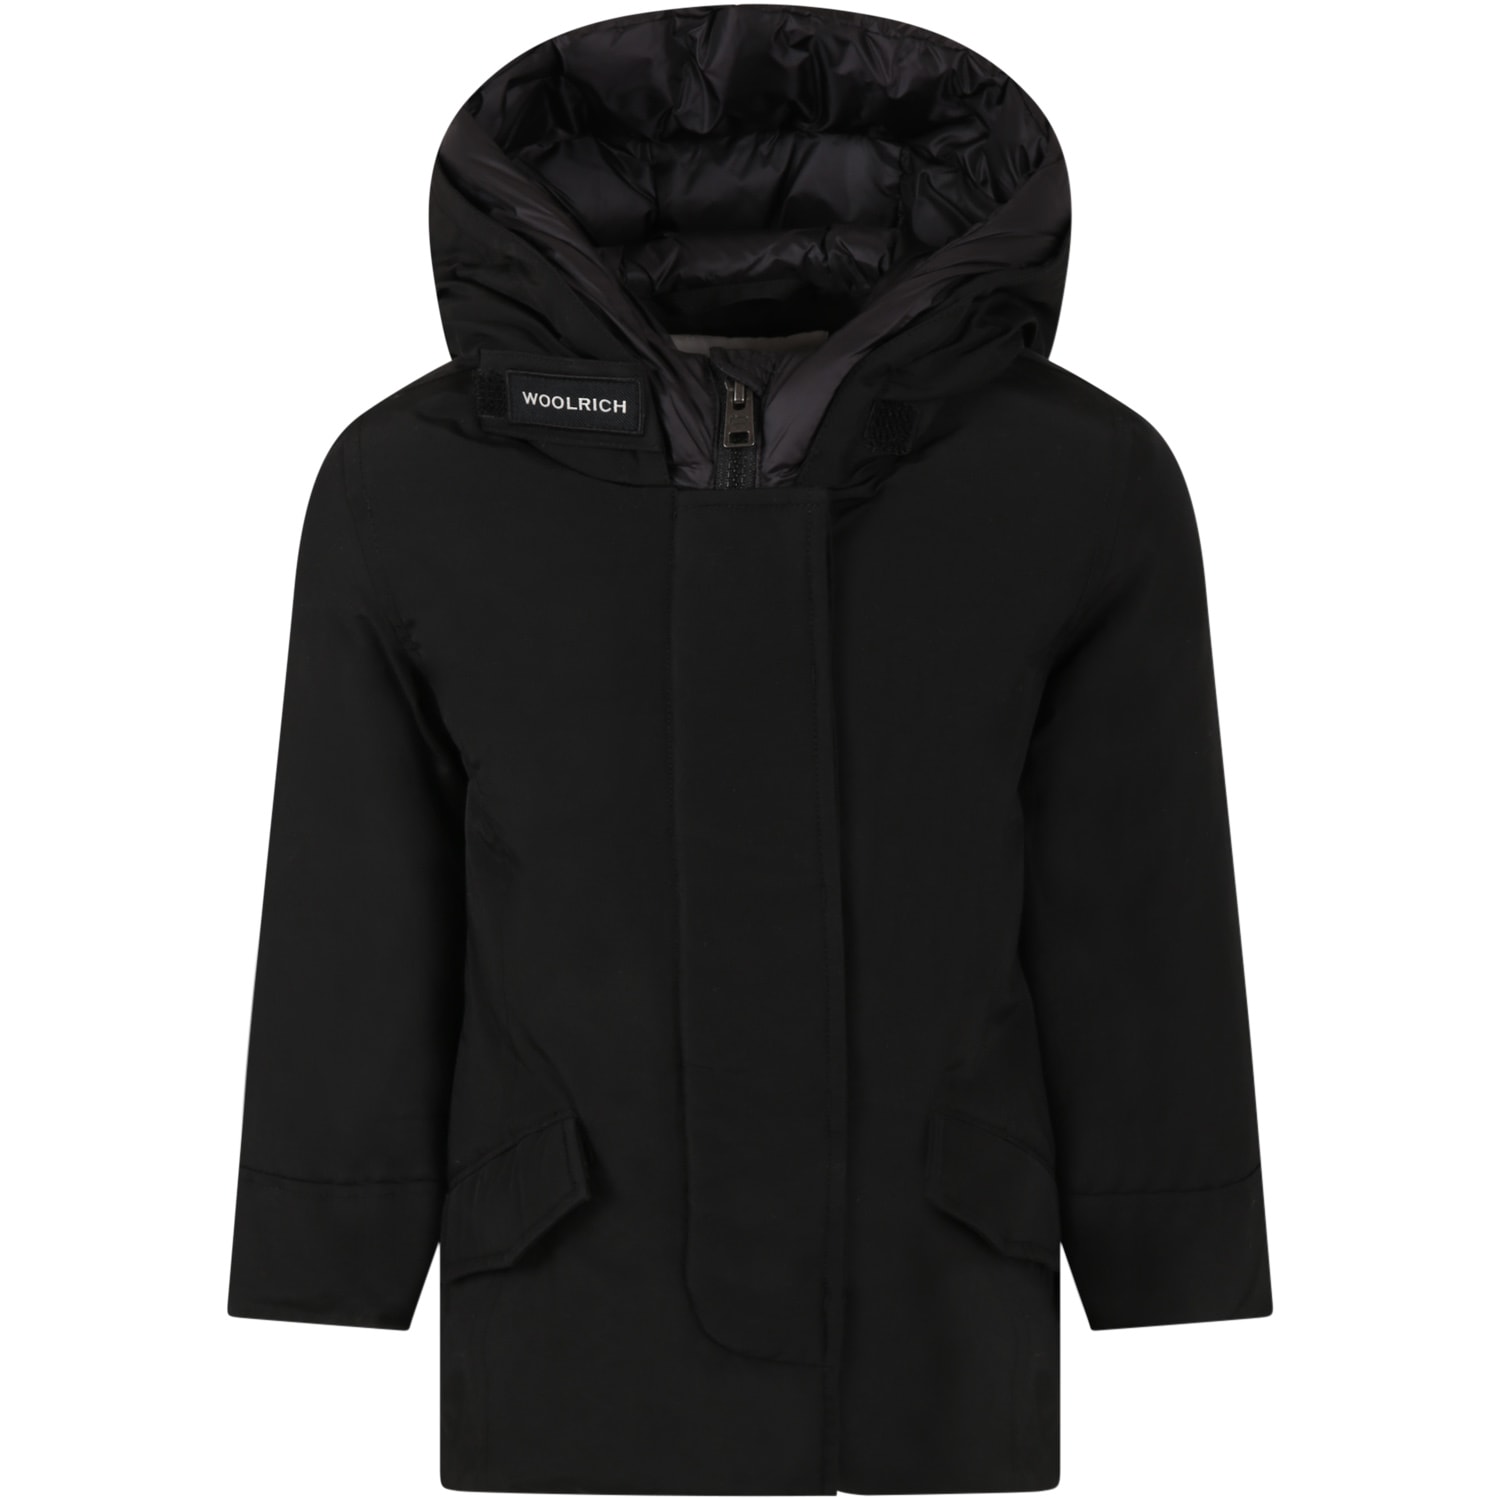 Woolrich Black arctic Parka Jacket For Girl